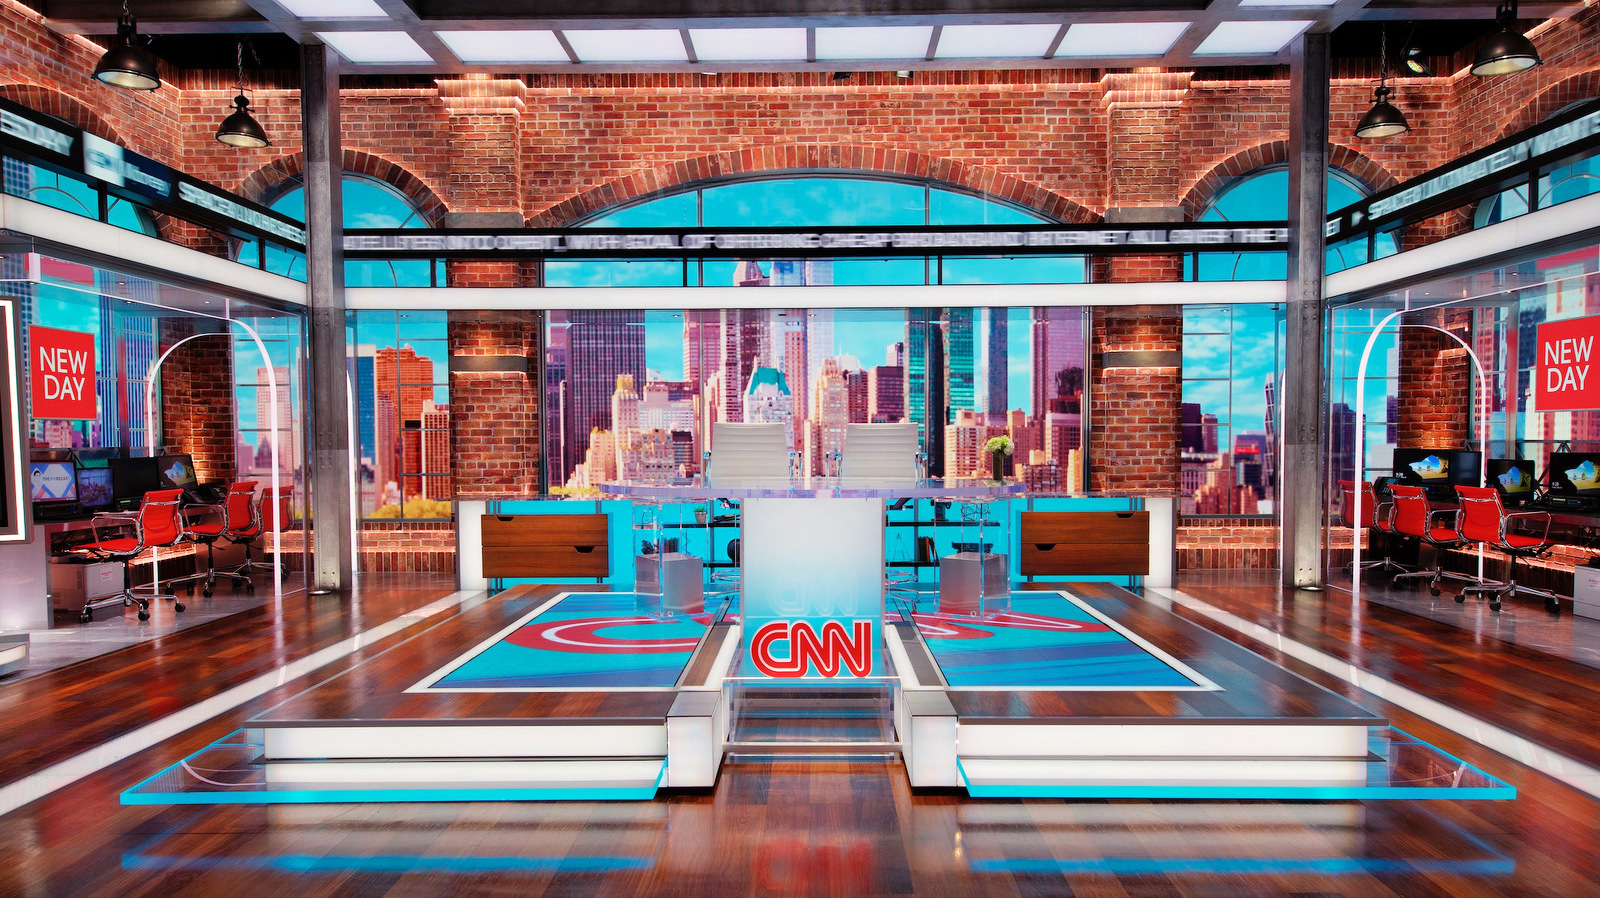 CNN Hudson Yards Studio 19Y-新日和Cuomo